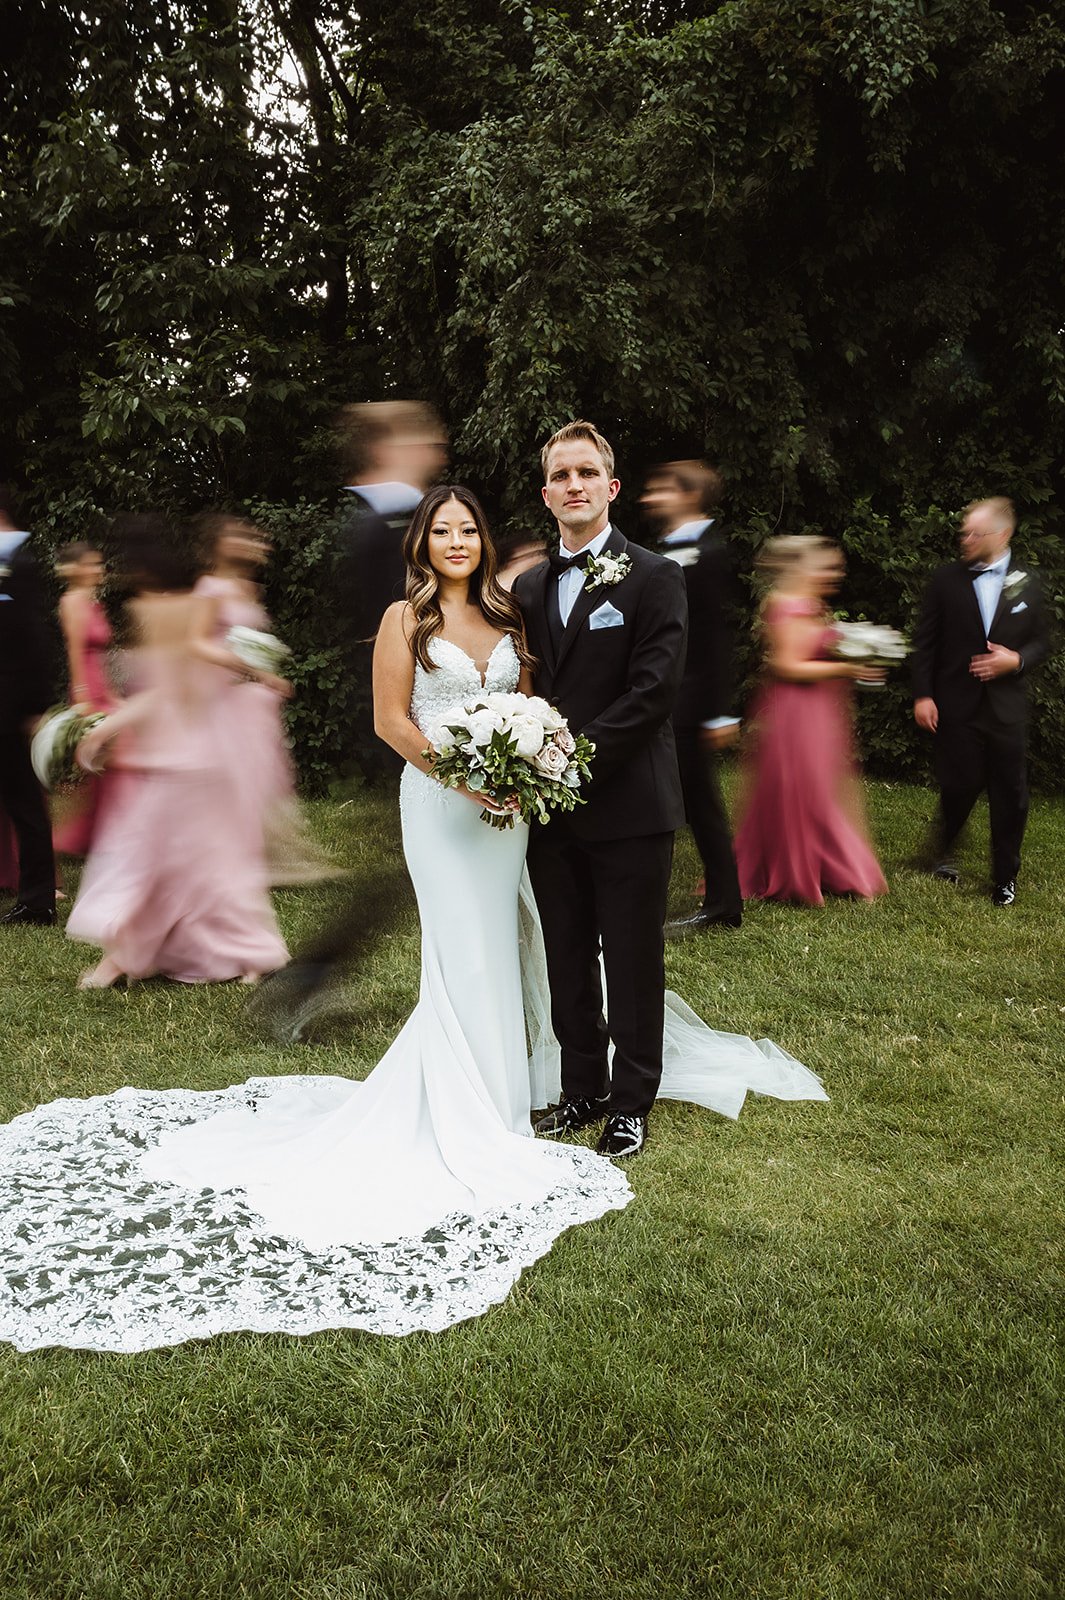 Carol-Max-Podschwadt-Wedding-Rachelle-Welling-Photography--11_websize.jpg